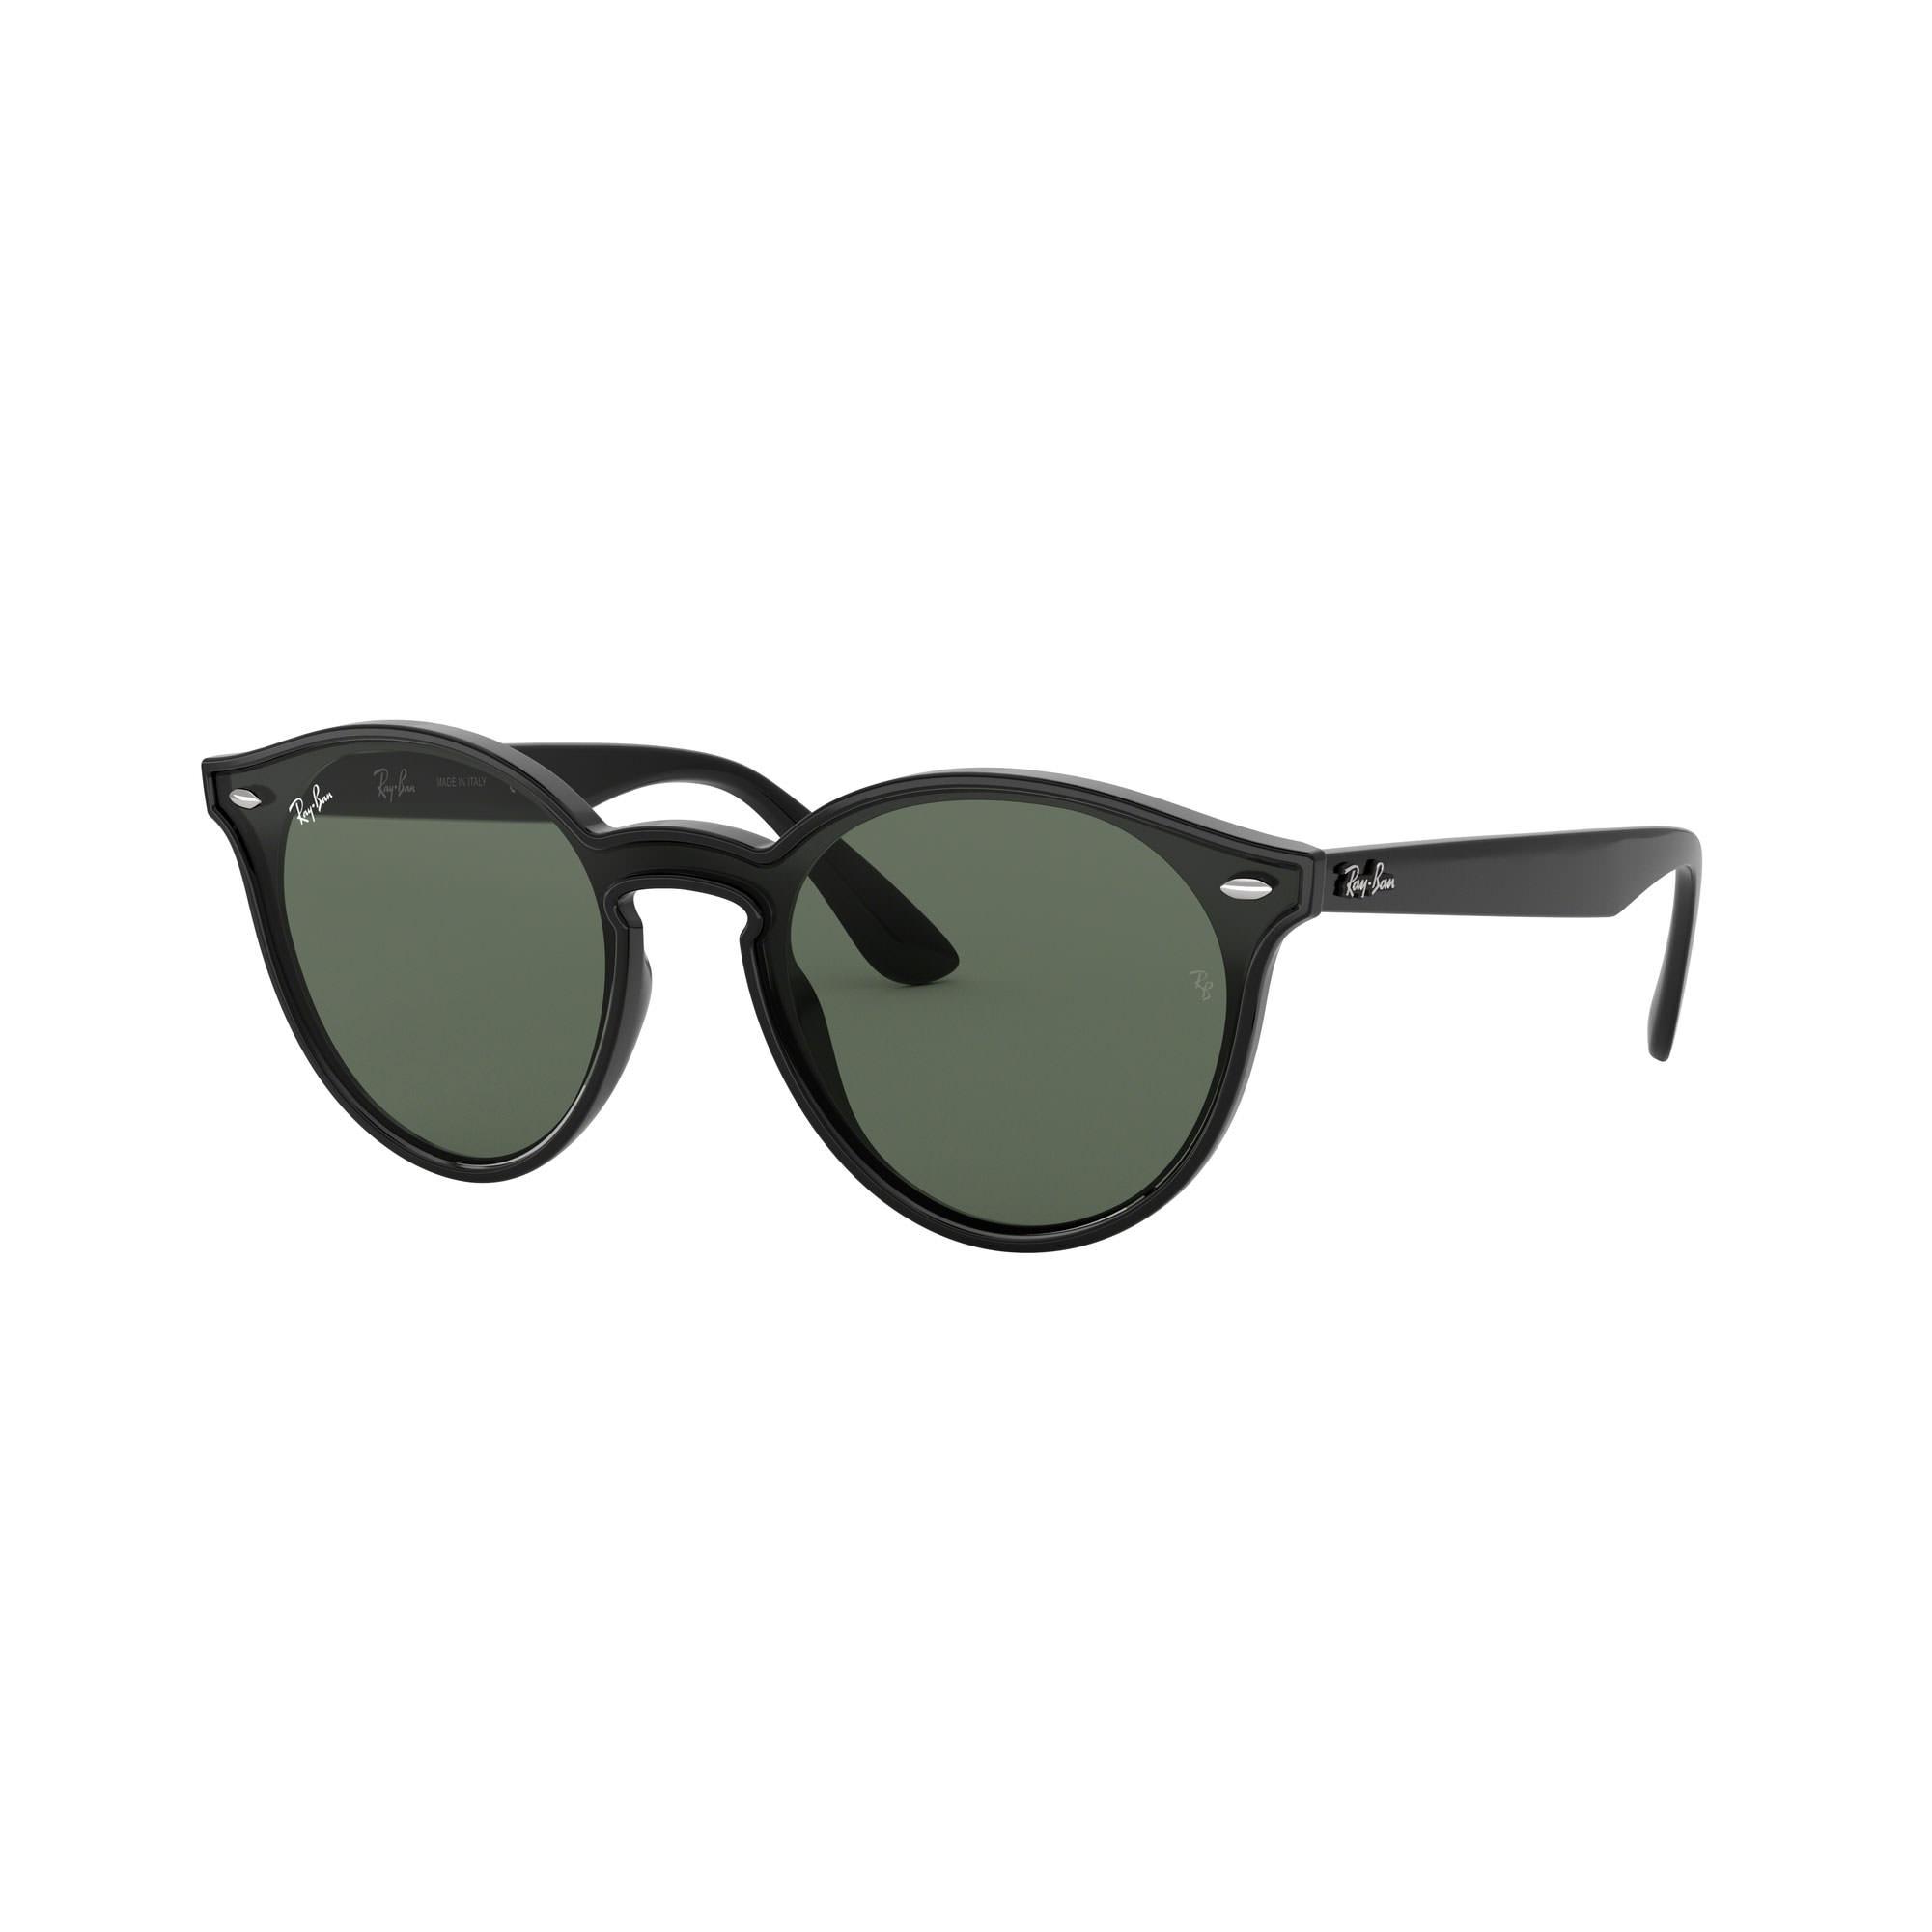 RB4380N Phantos Sunglasses